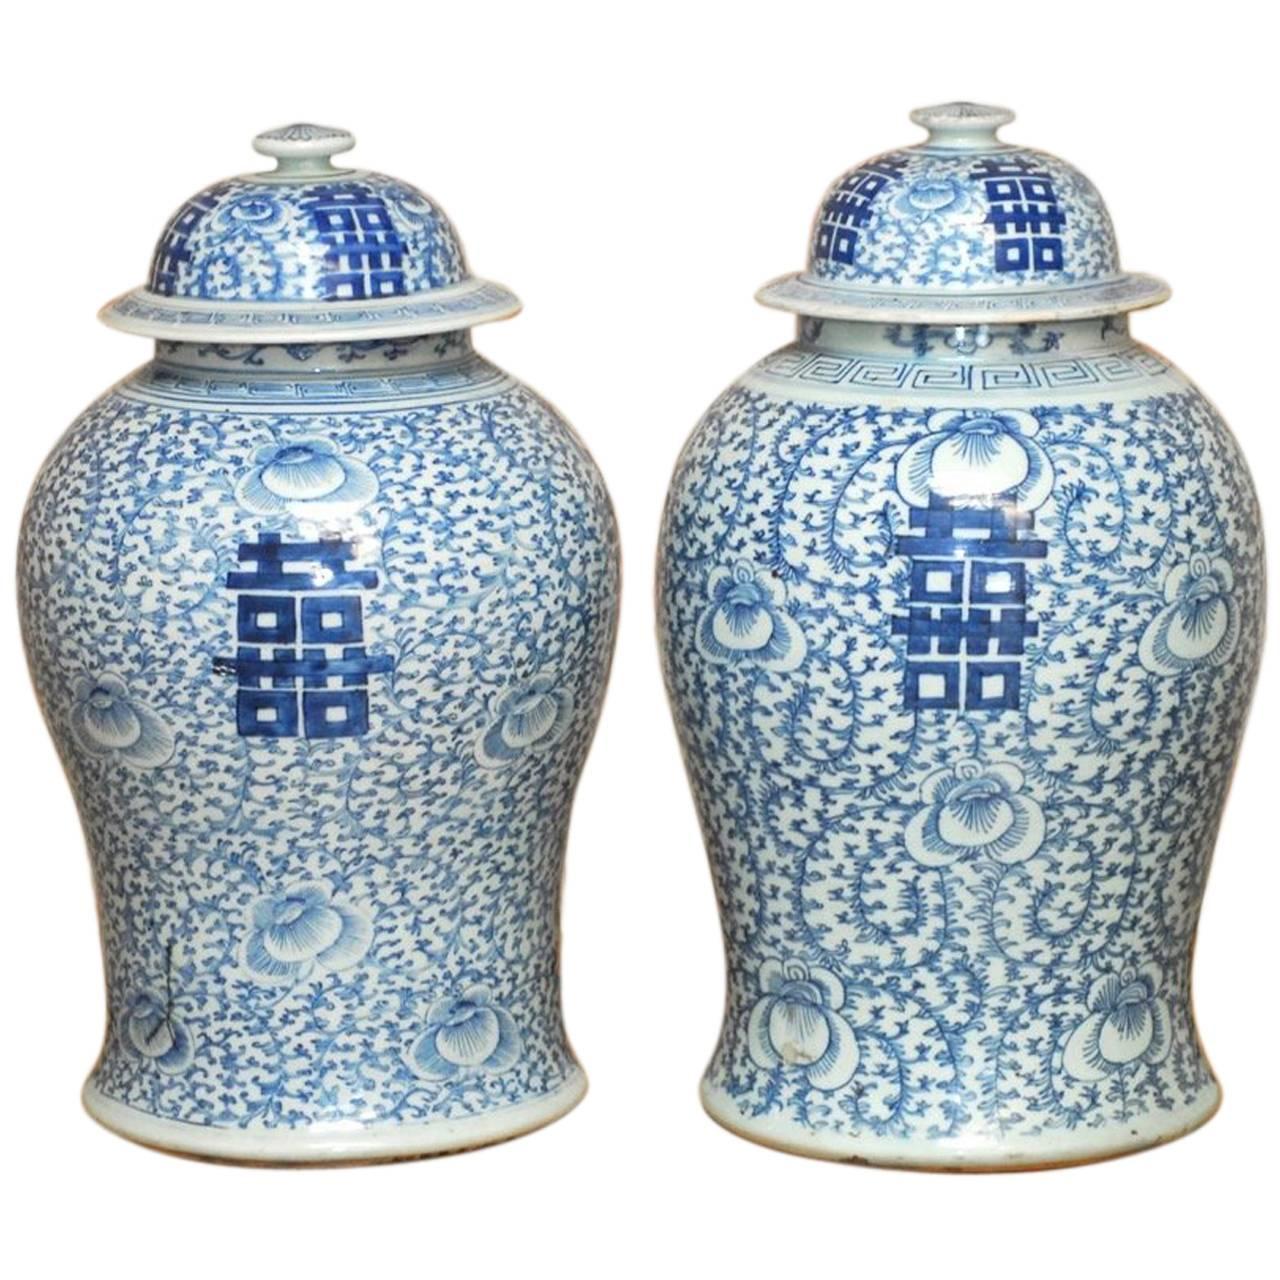 Pair of Chinese Blue and White Porcelain Ginger Jar Vases